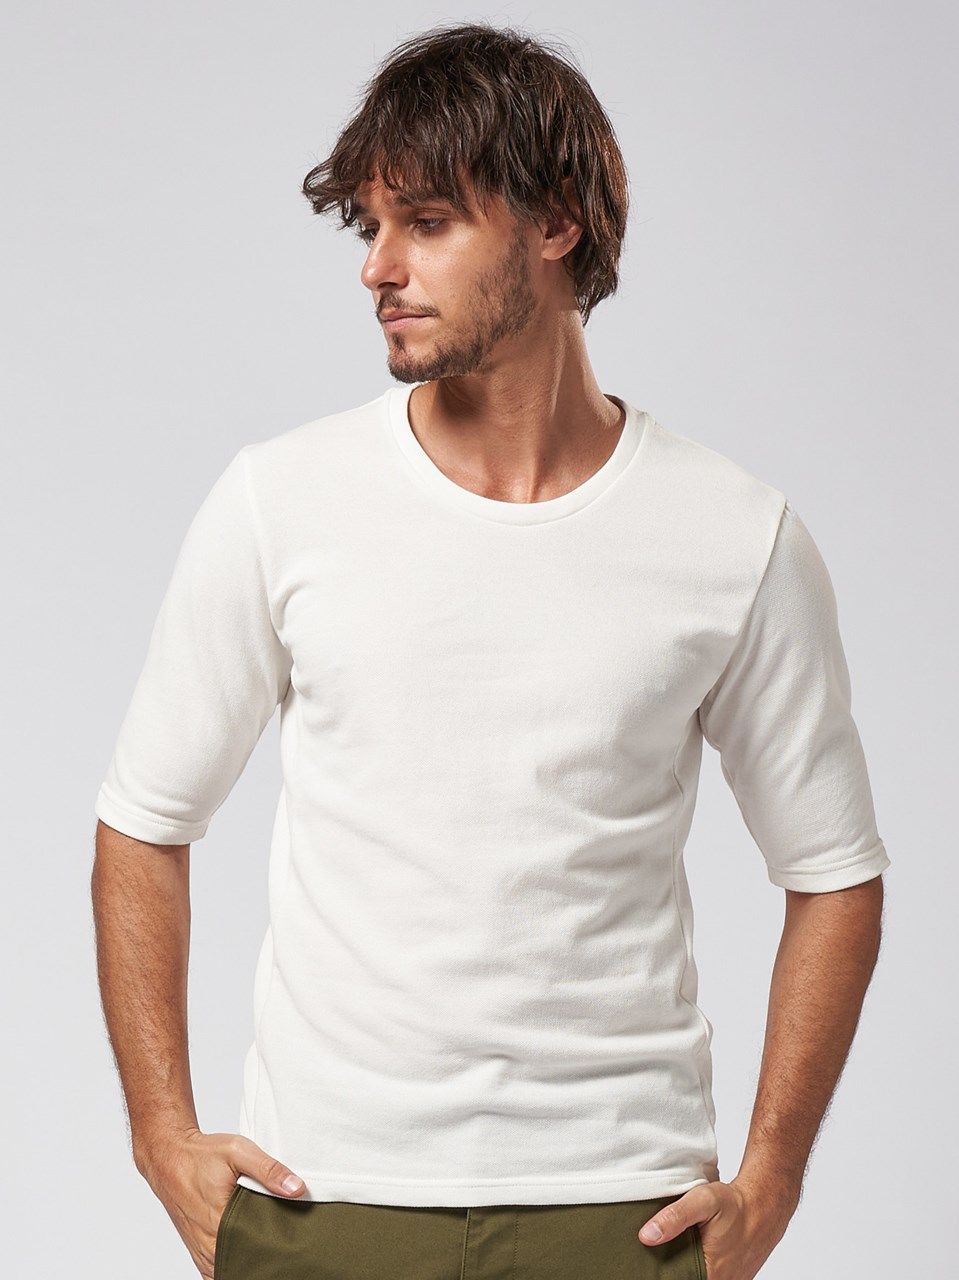 wjk - 《予約品》 half sleeve KANOKO cut&sewn / Tシャツ / ホワイト ...